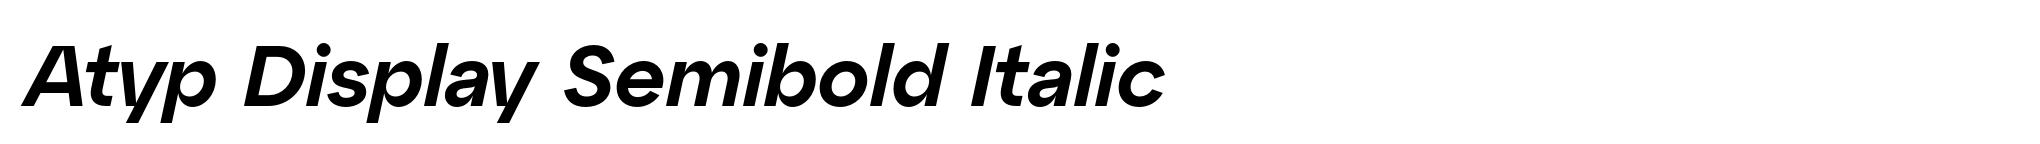 Atyp Display Semibold Italic image